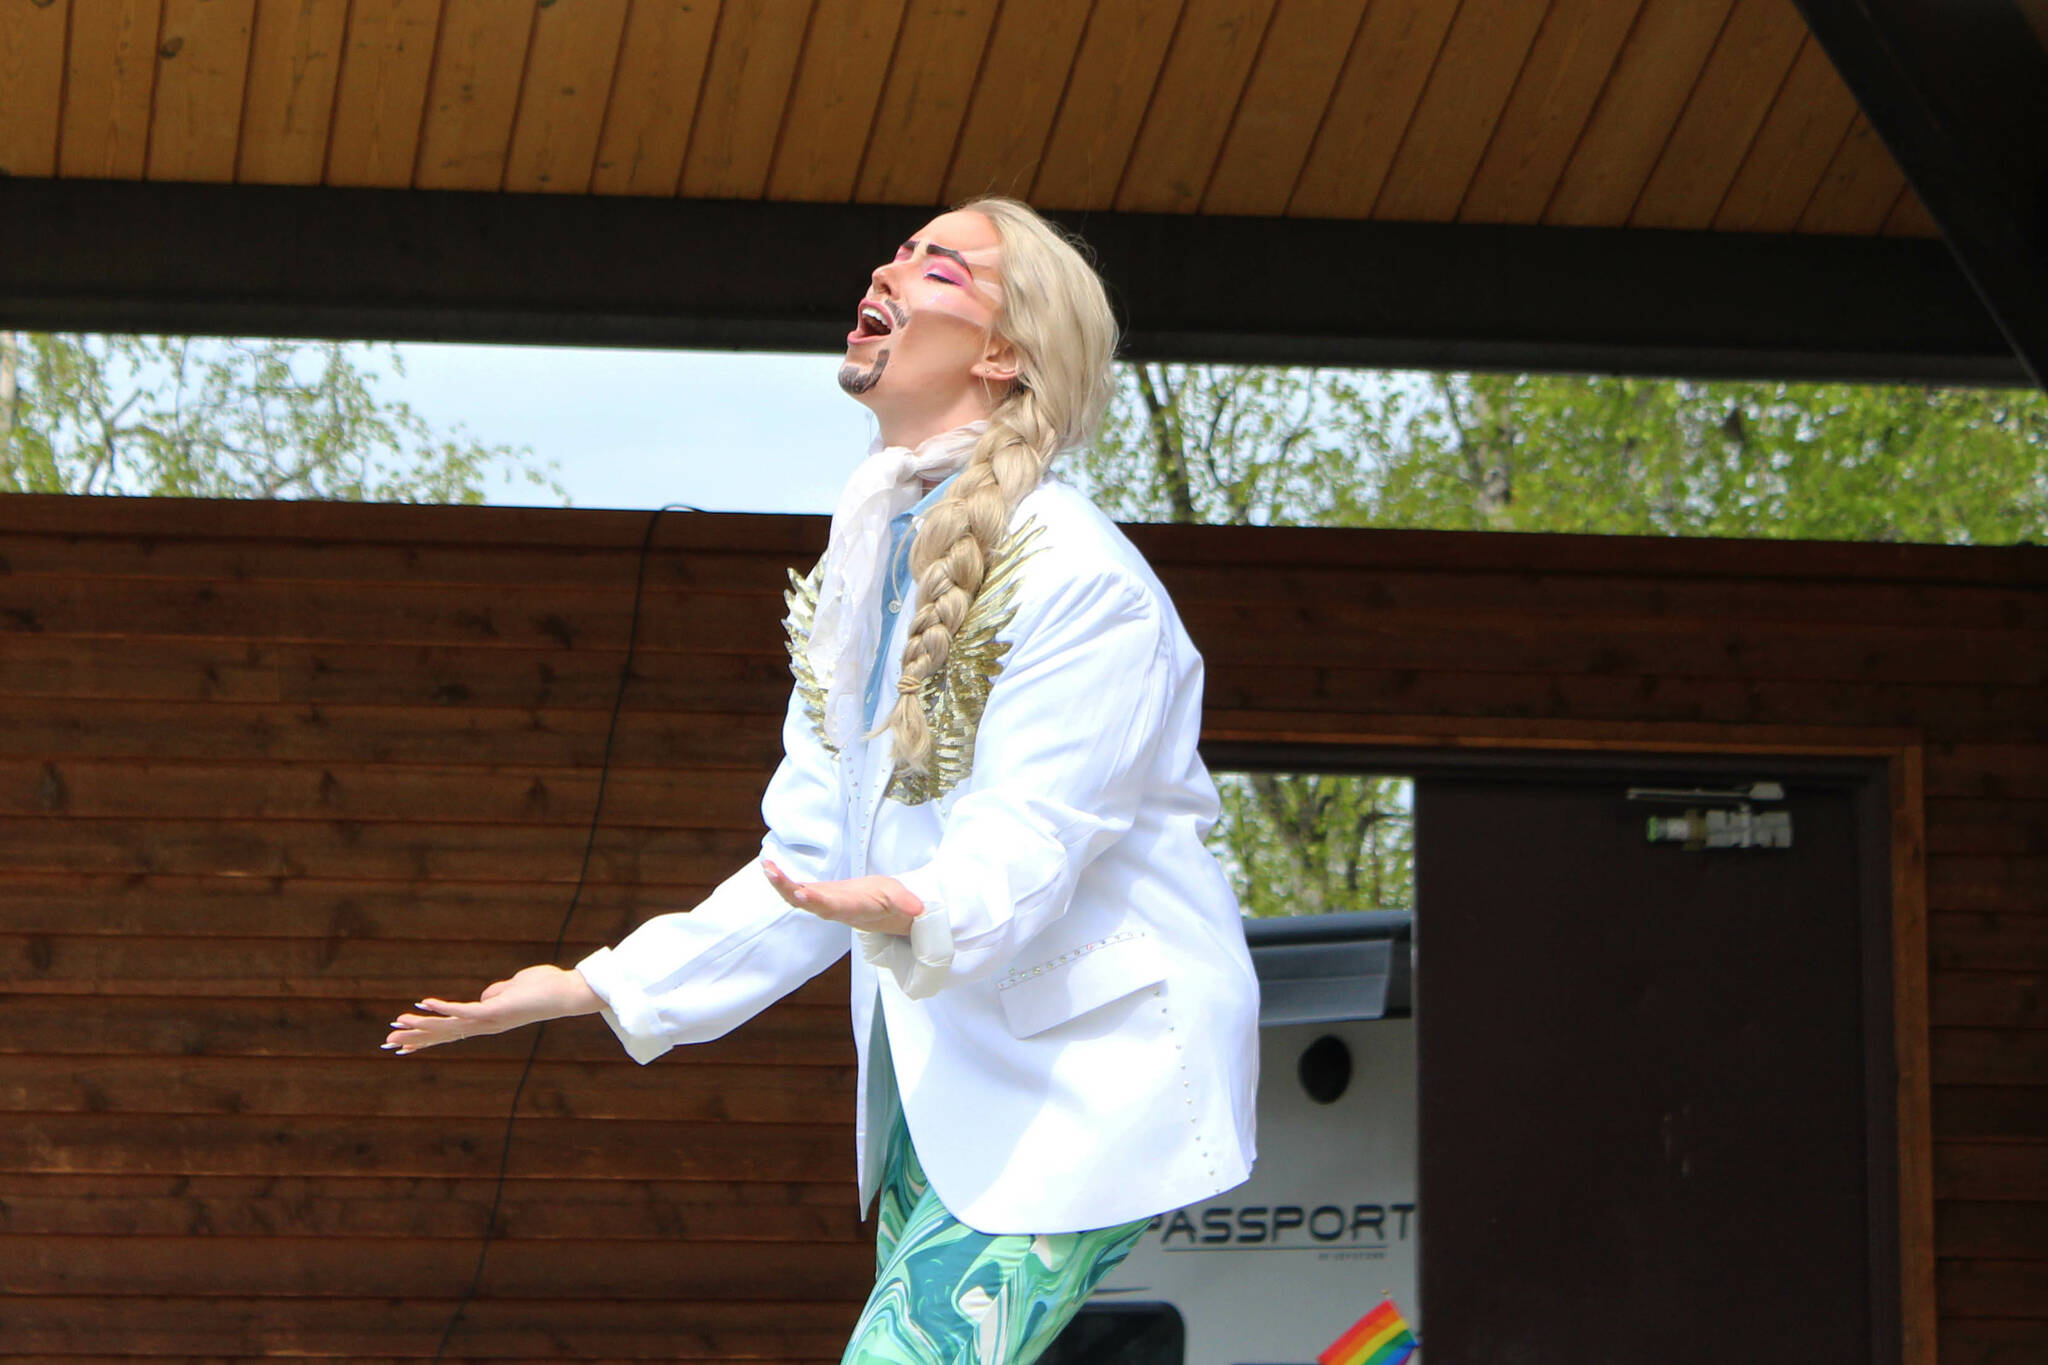 Drag performer Jasper Dragful performs “Into the Unknown” during a performance at Soldotna Creek Park on Saturday, June 3, 2023 in Soldotna, Alaska. (Ashlyn O’Hara/Peninsula Clarion)